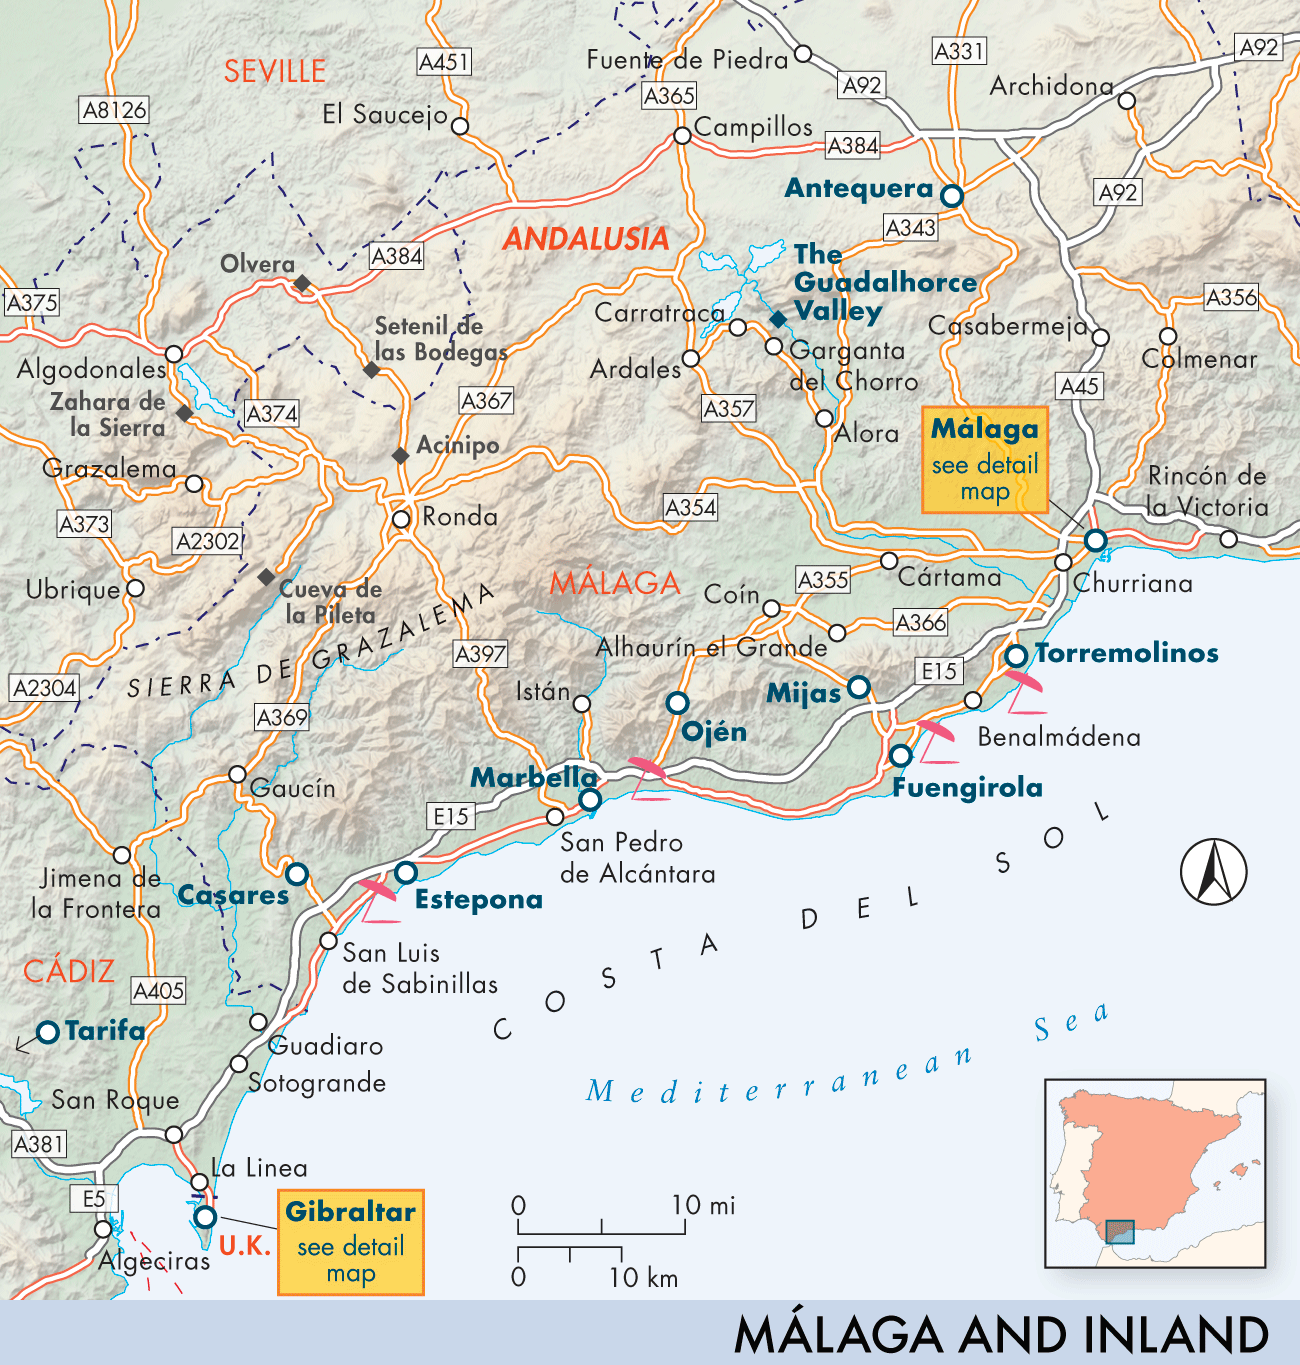 Málaga and Inland